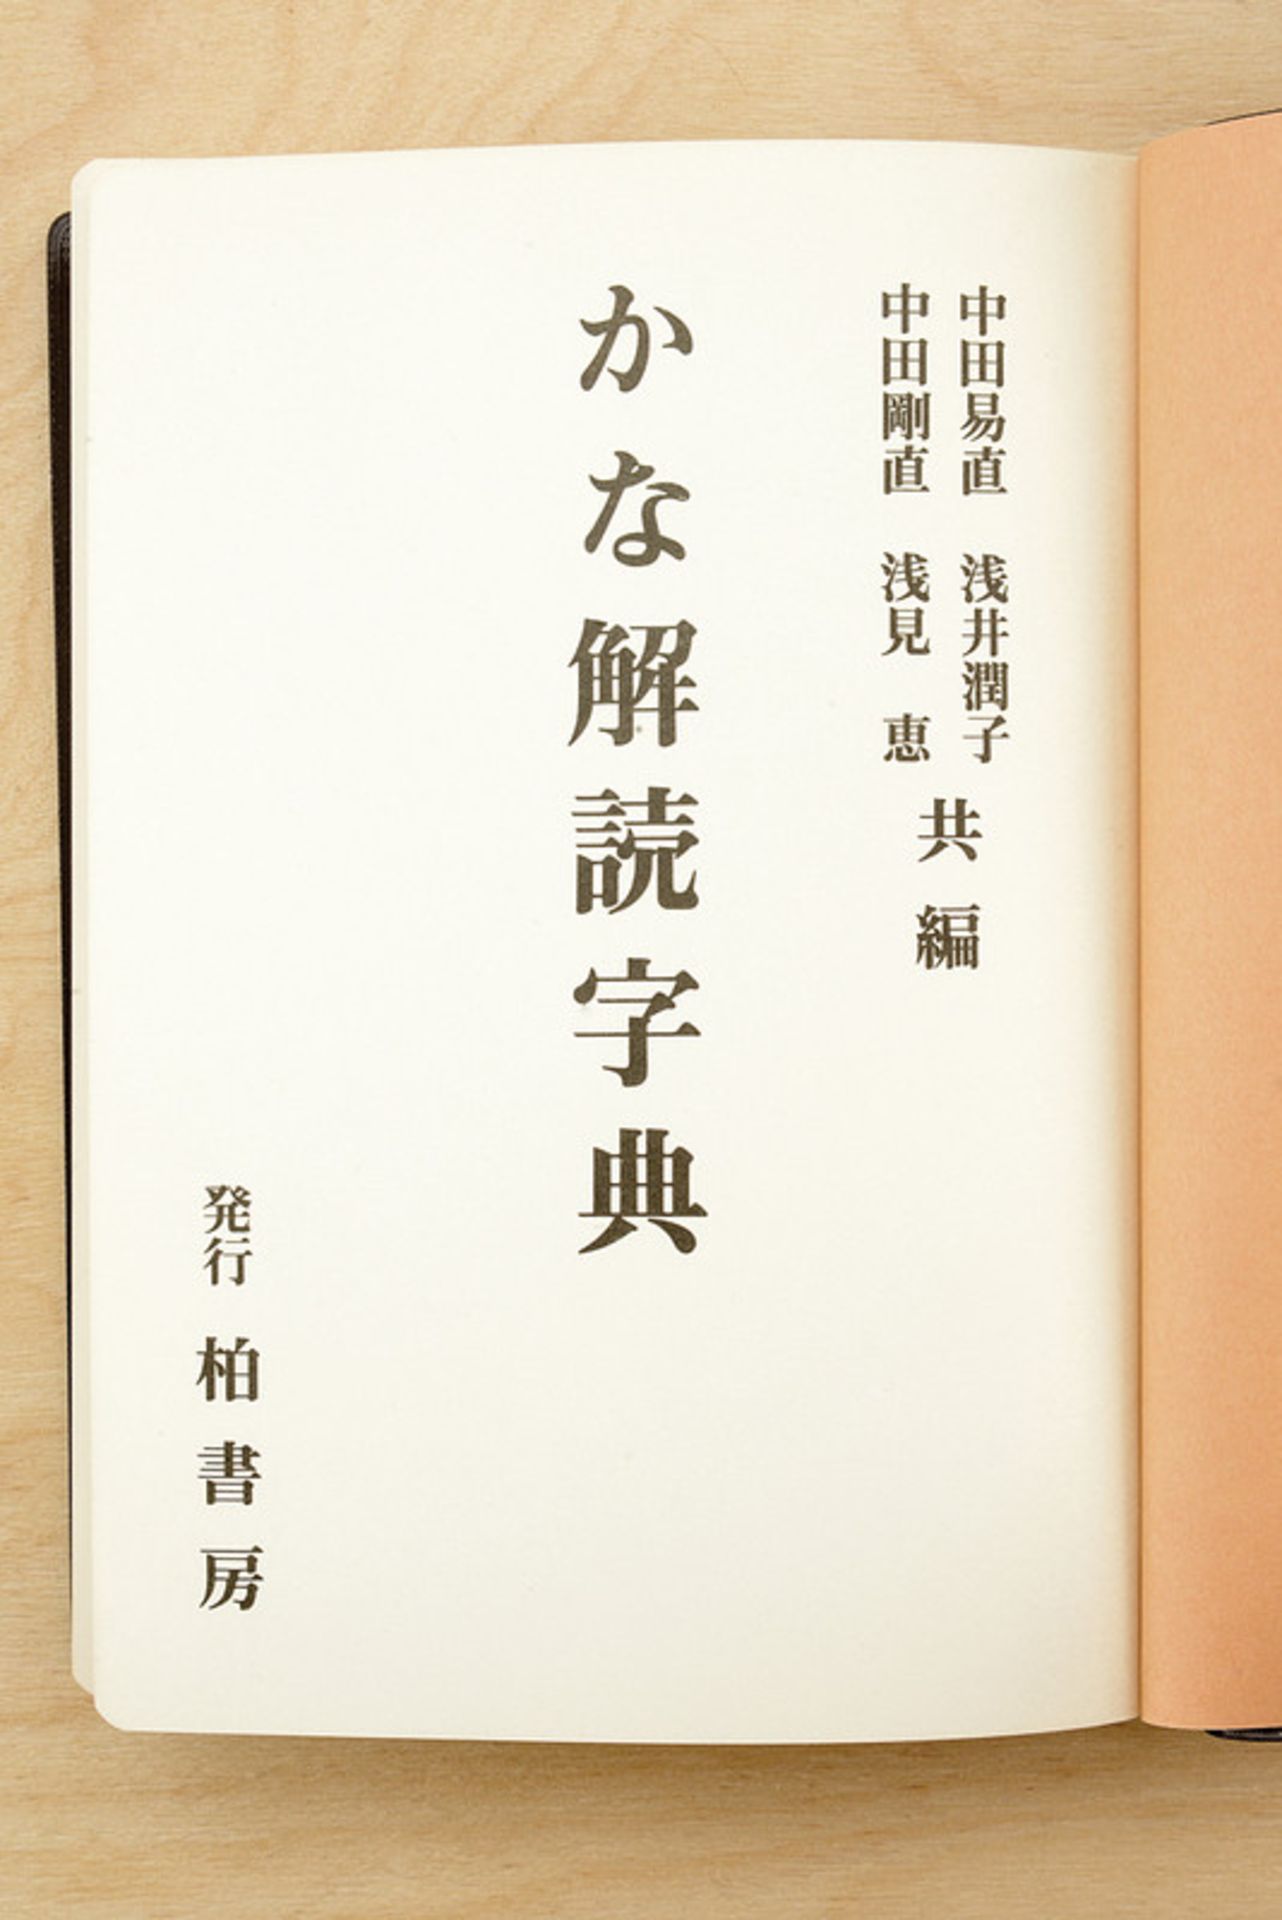 Nakada dating: 20th Century provenance: Japan "Kana Kun Yomi Jiten" (Kana character decoding - Image 3 of 4